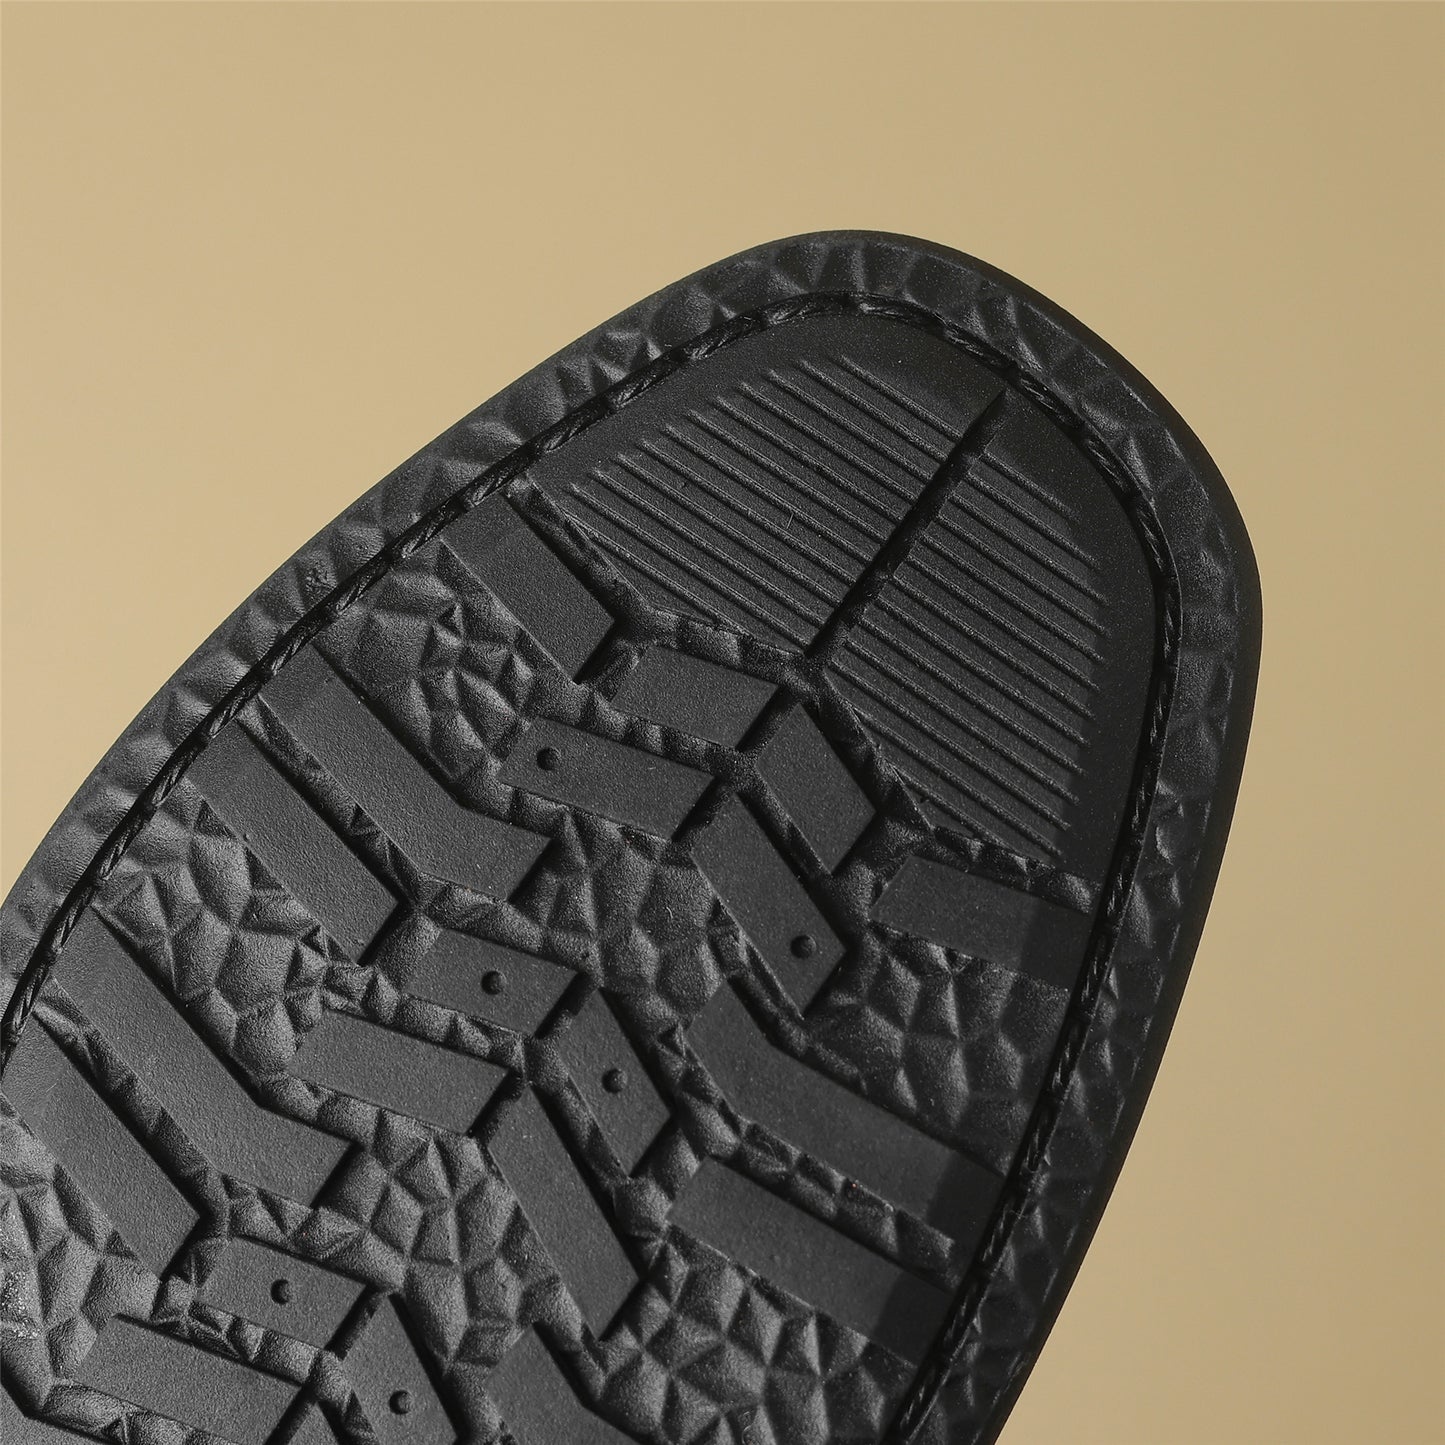 TinaCus Women's Handmade Genuine Leather Round Toe Slip On Flat Shoes